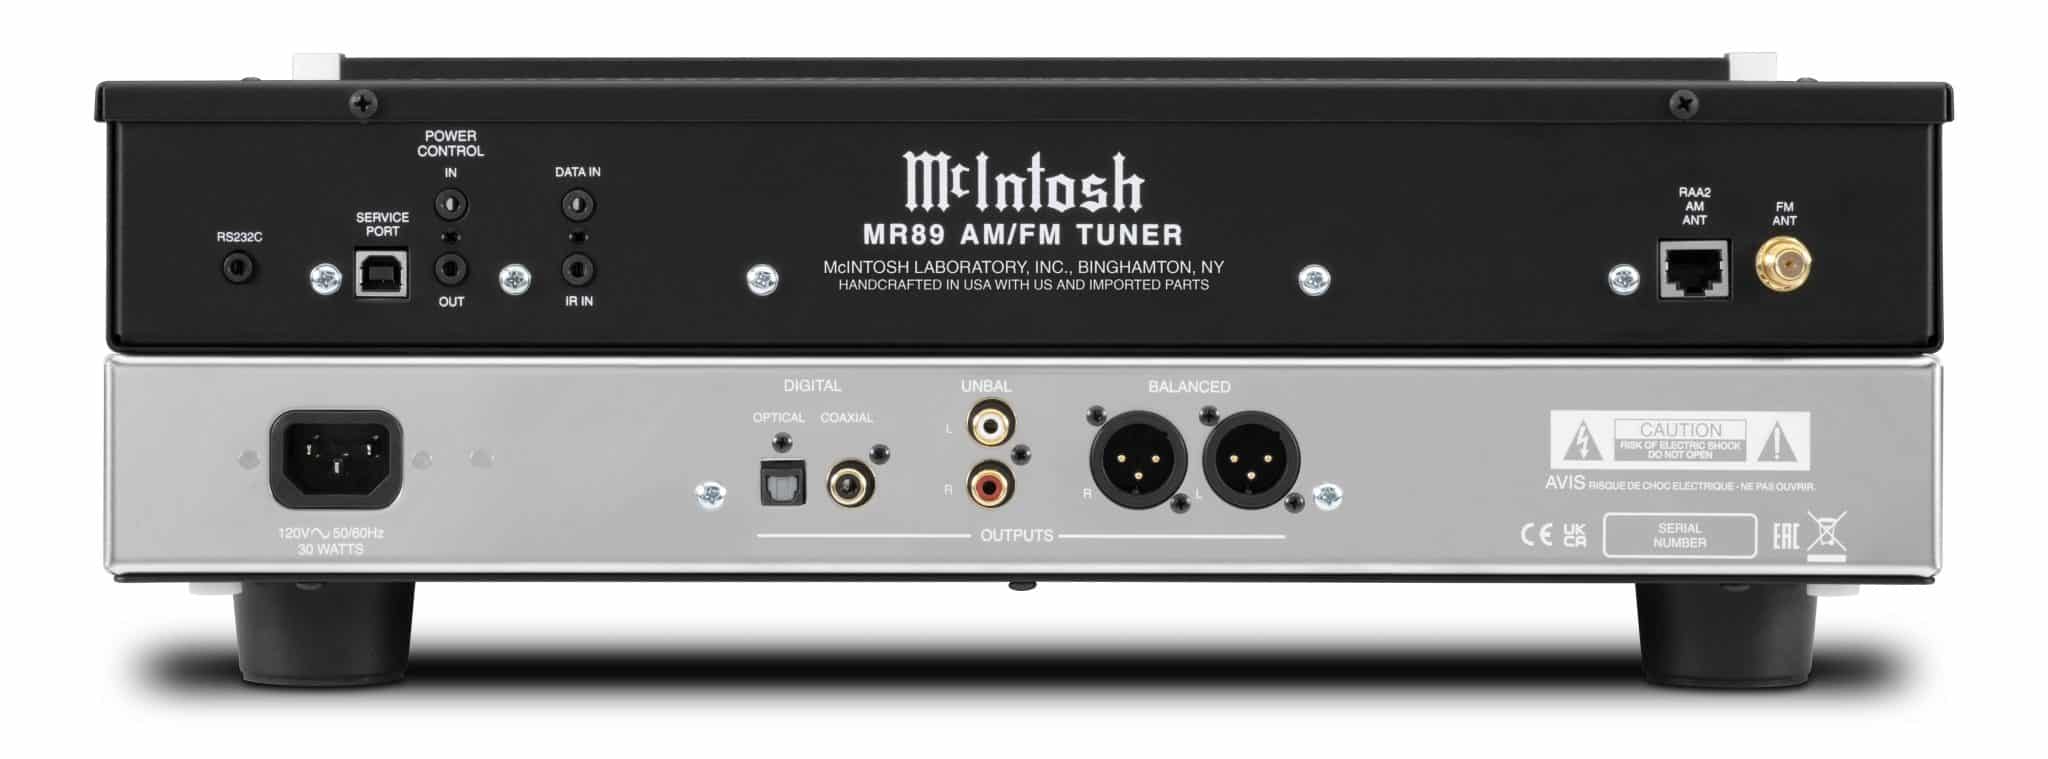 MR89 AM/FM Tuner From McIntosh 